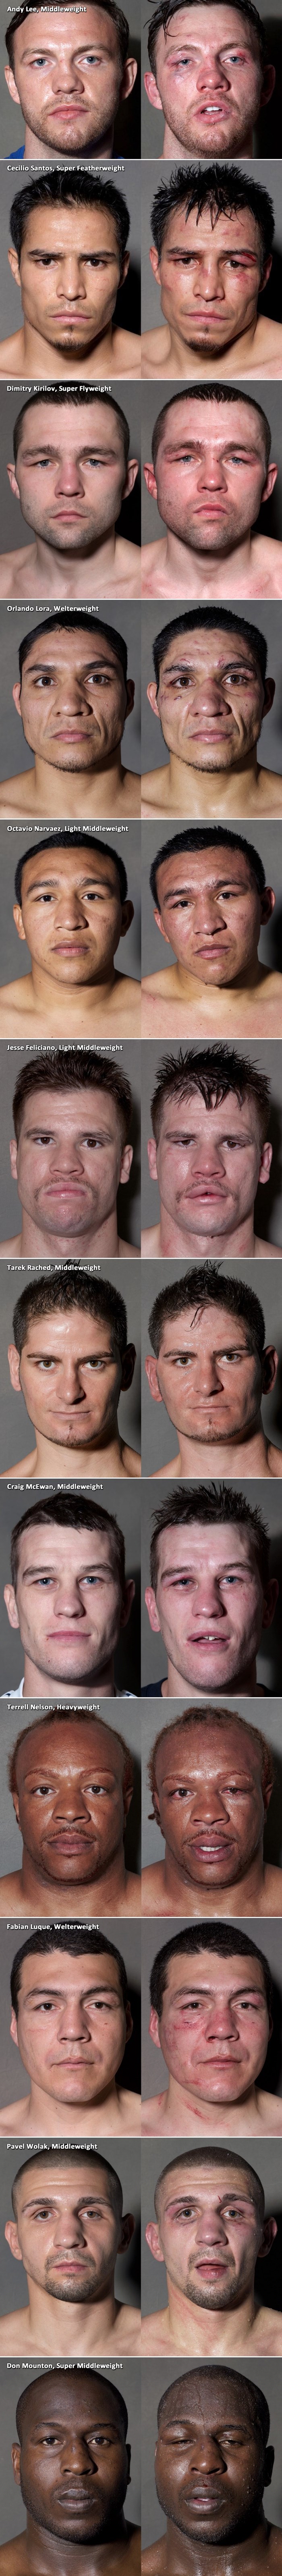 Lica 12 boksača prije i nakon borbe